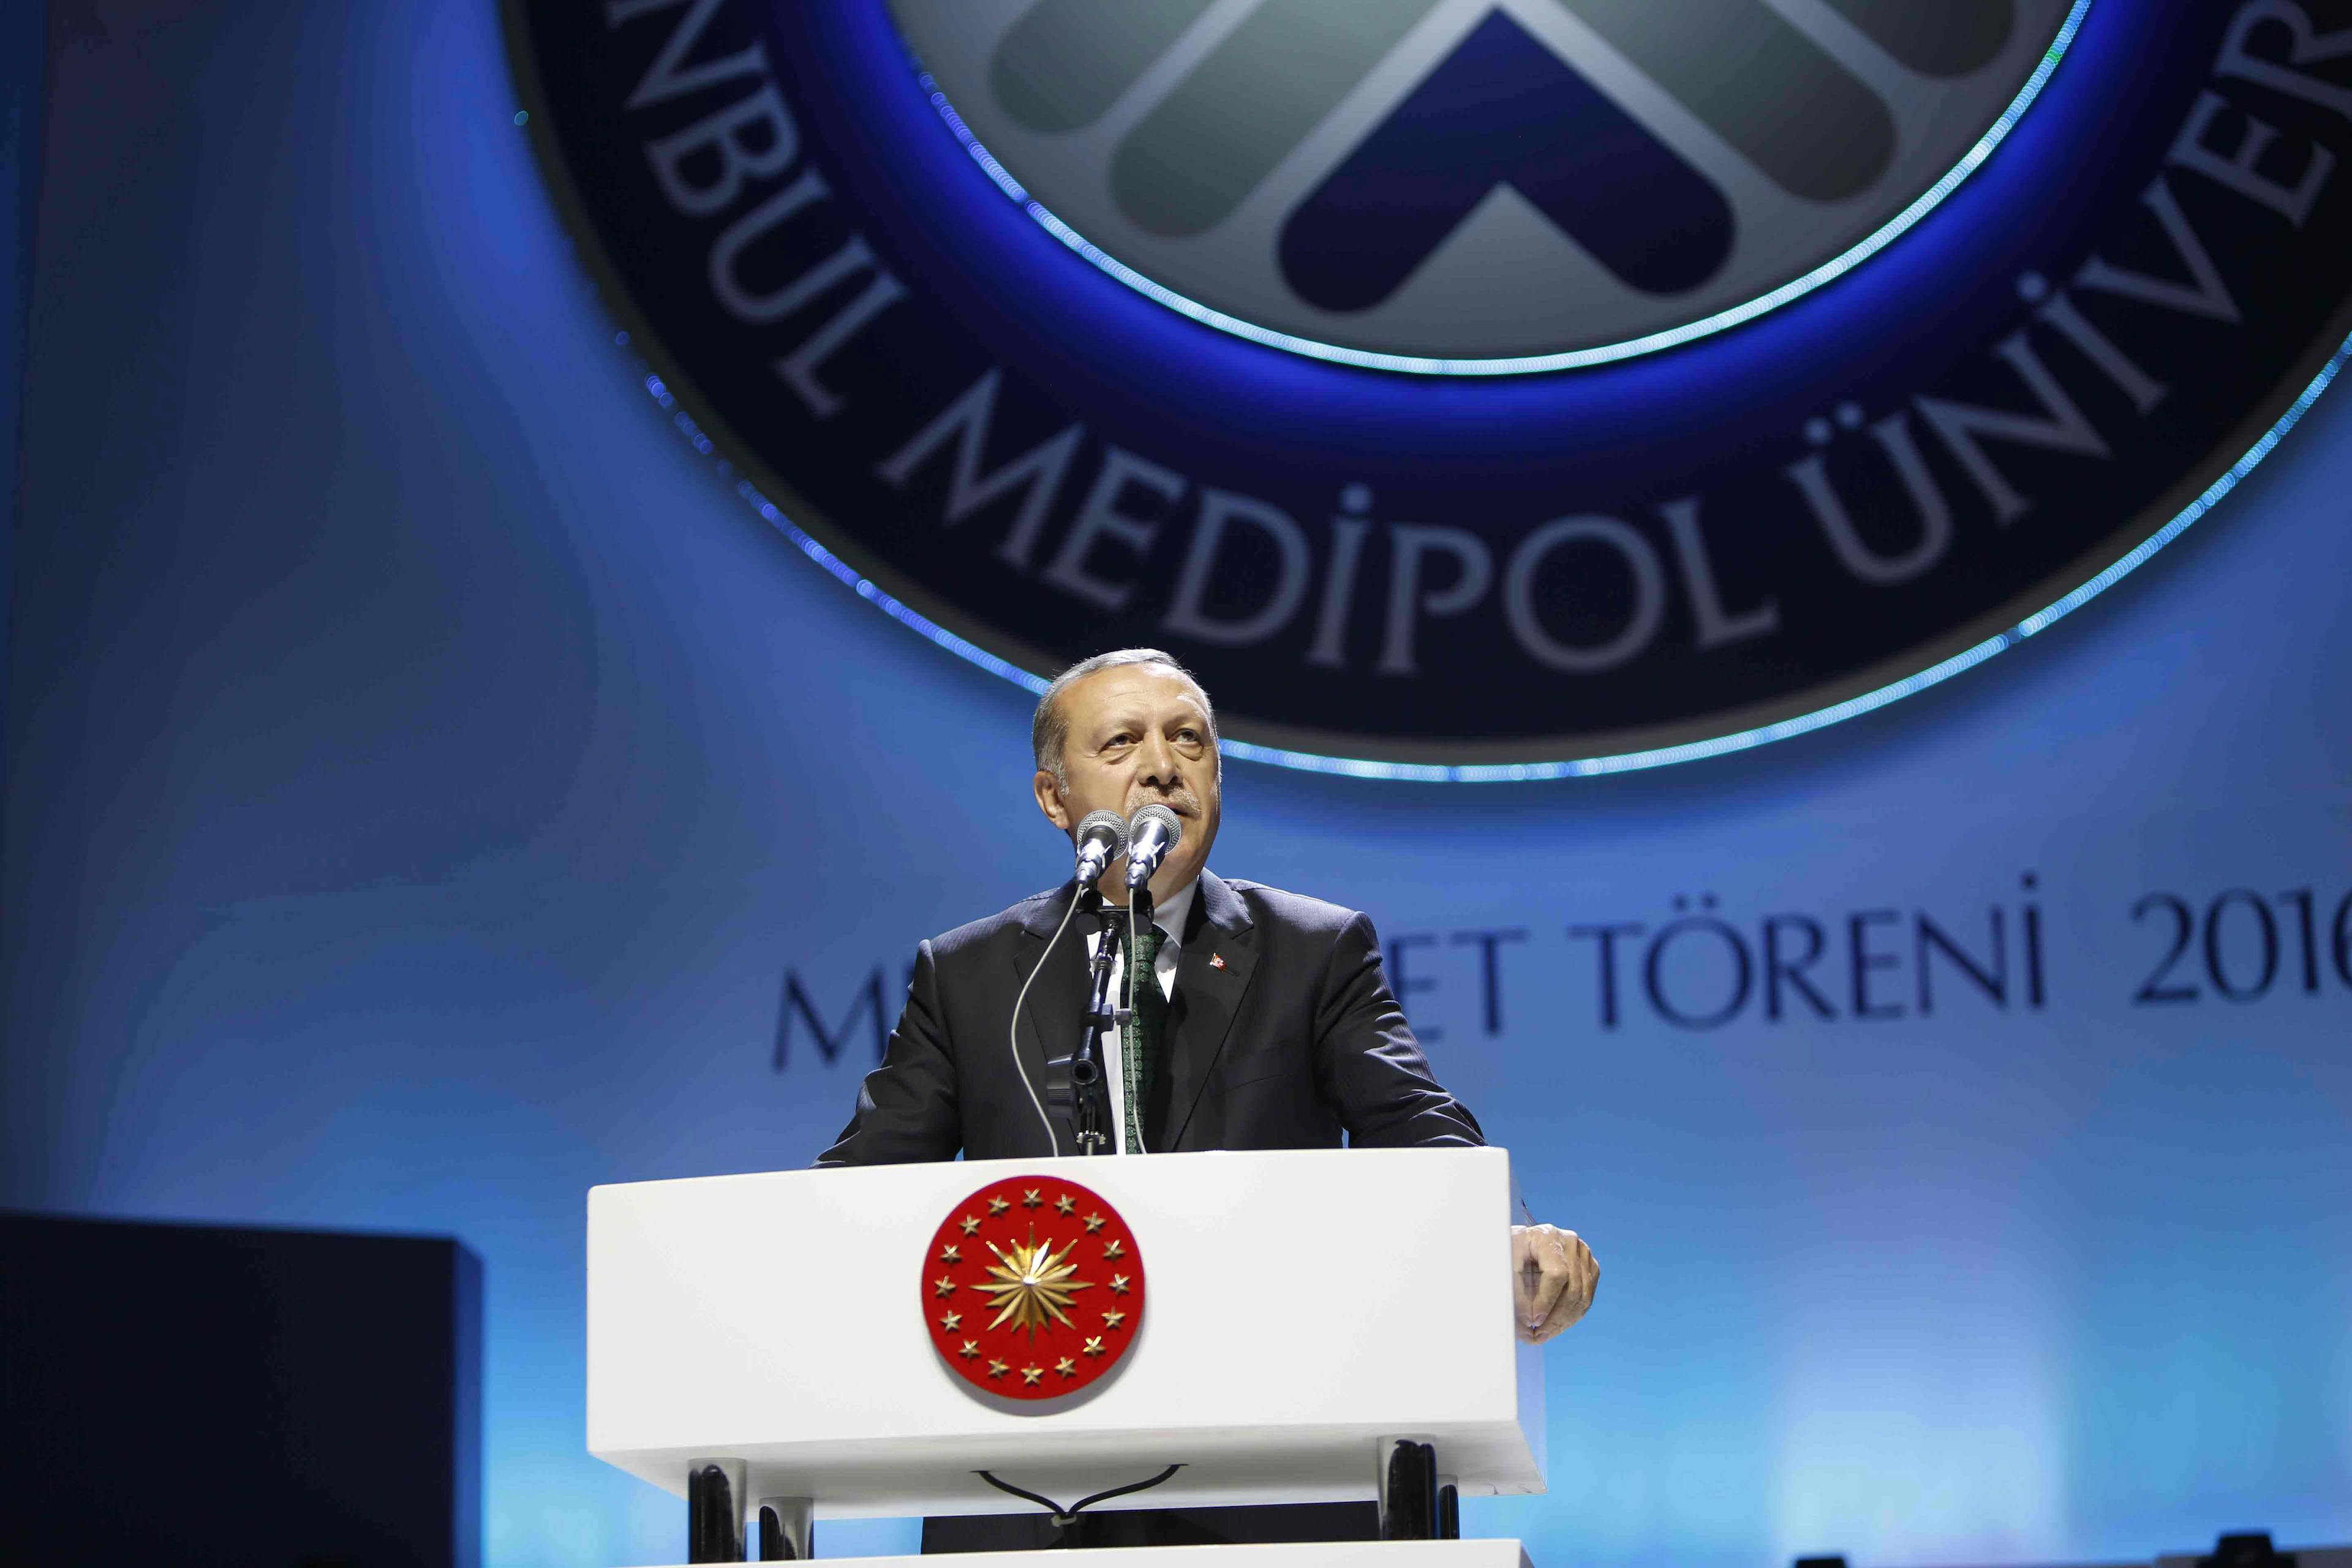 Medipol University Programs - Ranking & Tuition Fees   جامعة ميديبول في اسطنبول - رسوم التخصصات  - ترتيب الجامعة  